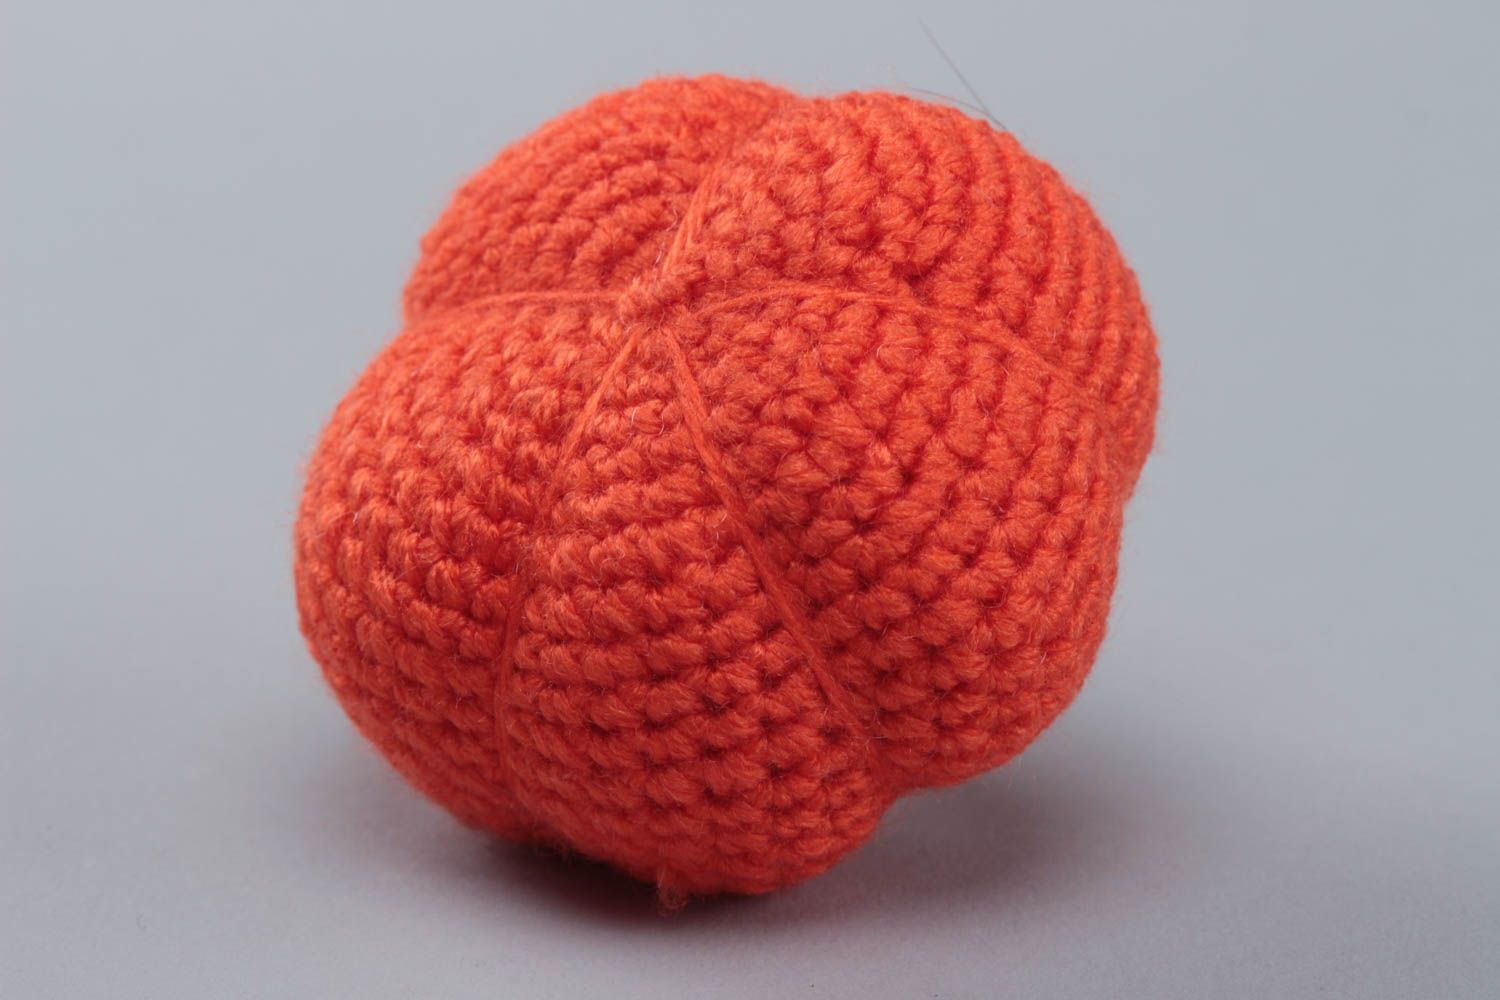 Handmade small crochet soft toy orange pumpkin for kids and interior decor photo 3